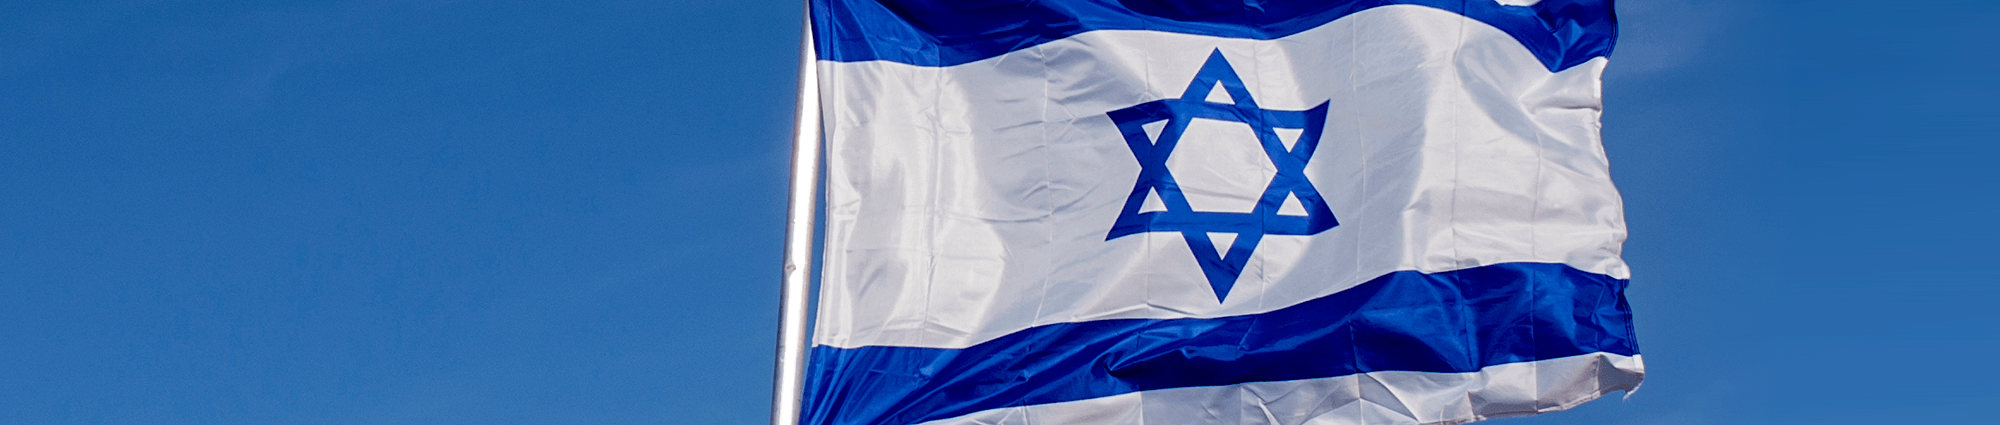 Photo of the Israeli flag waving